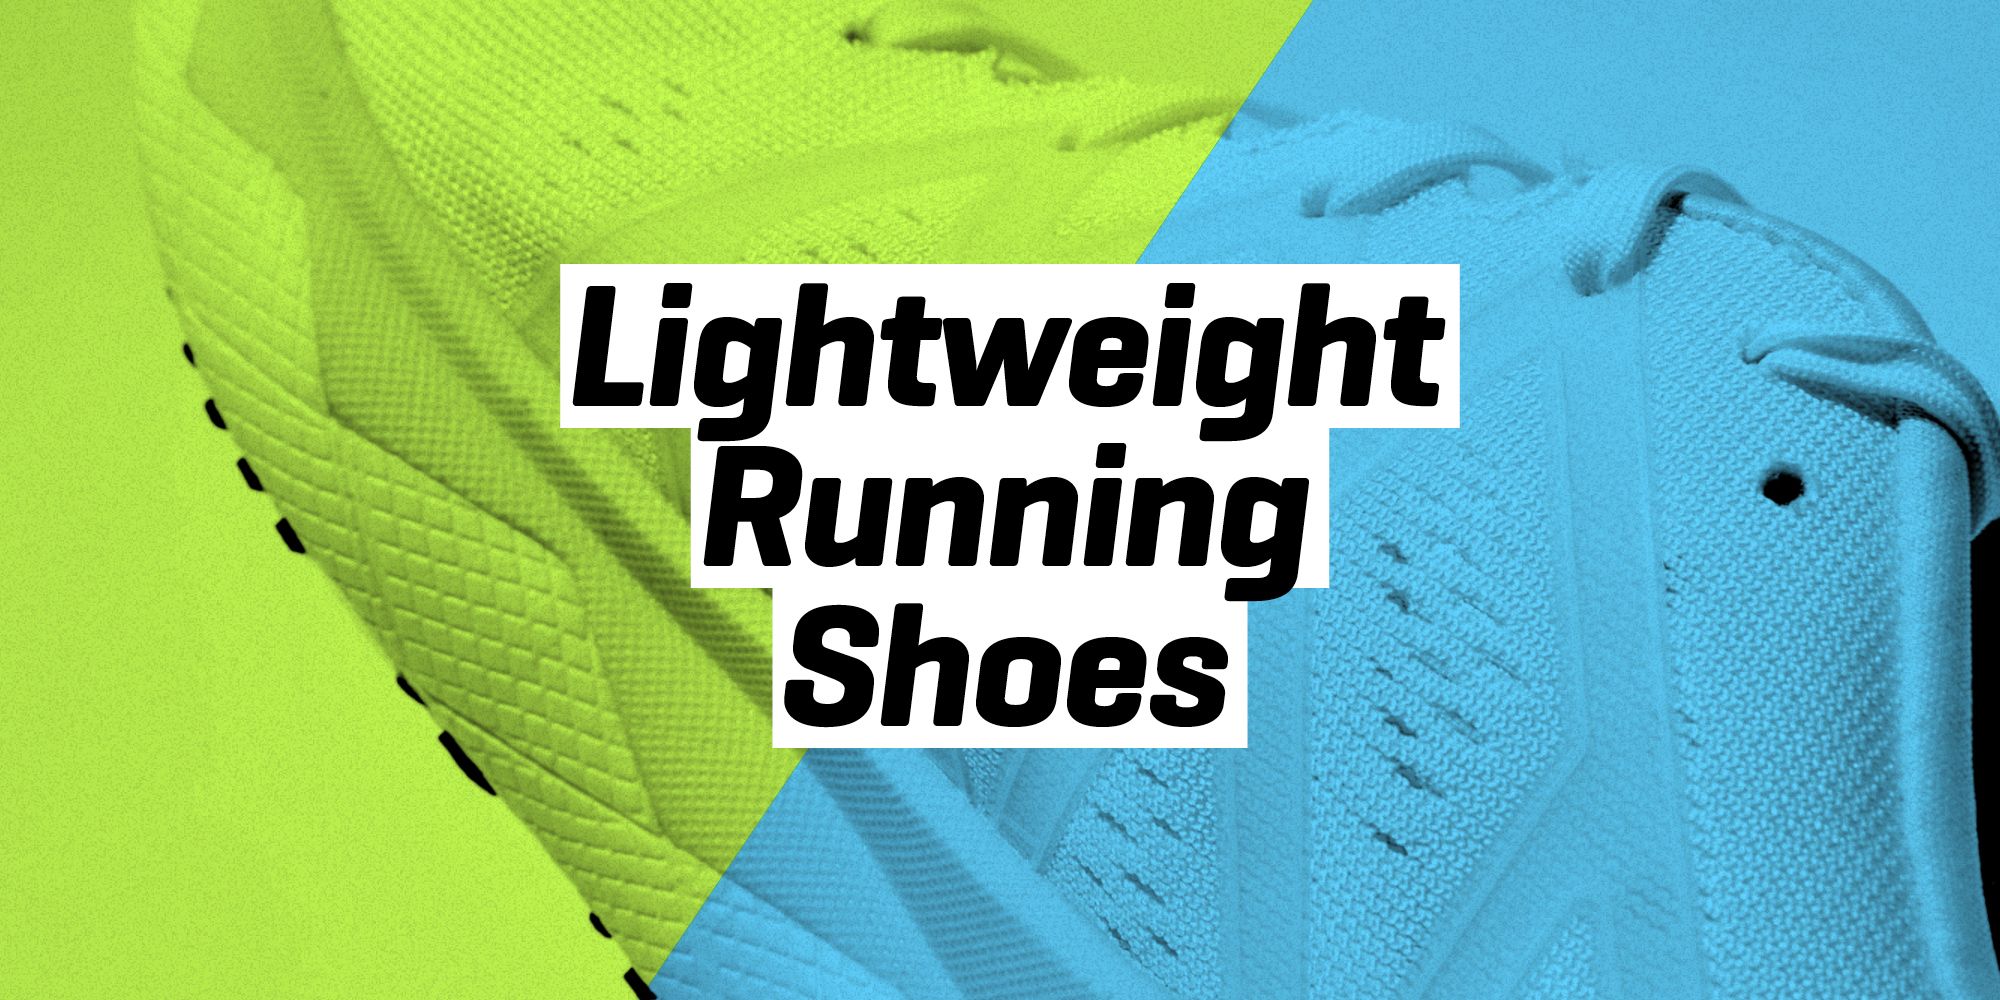 lightest weight running shoes